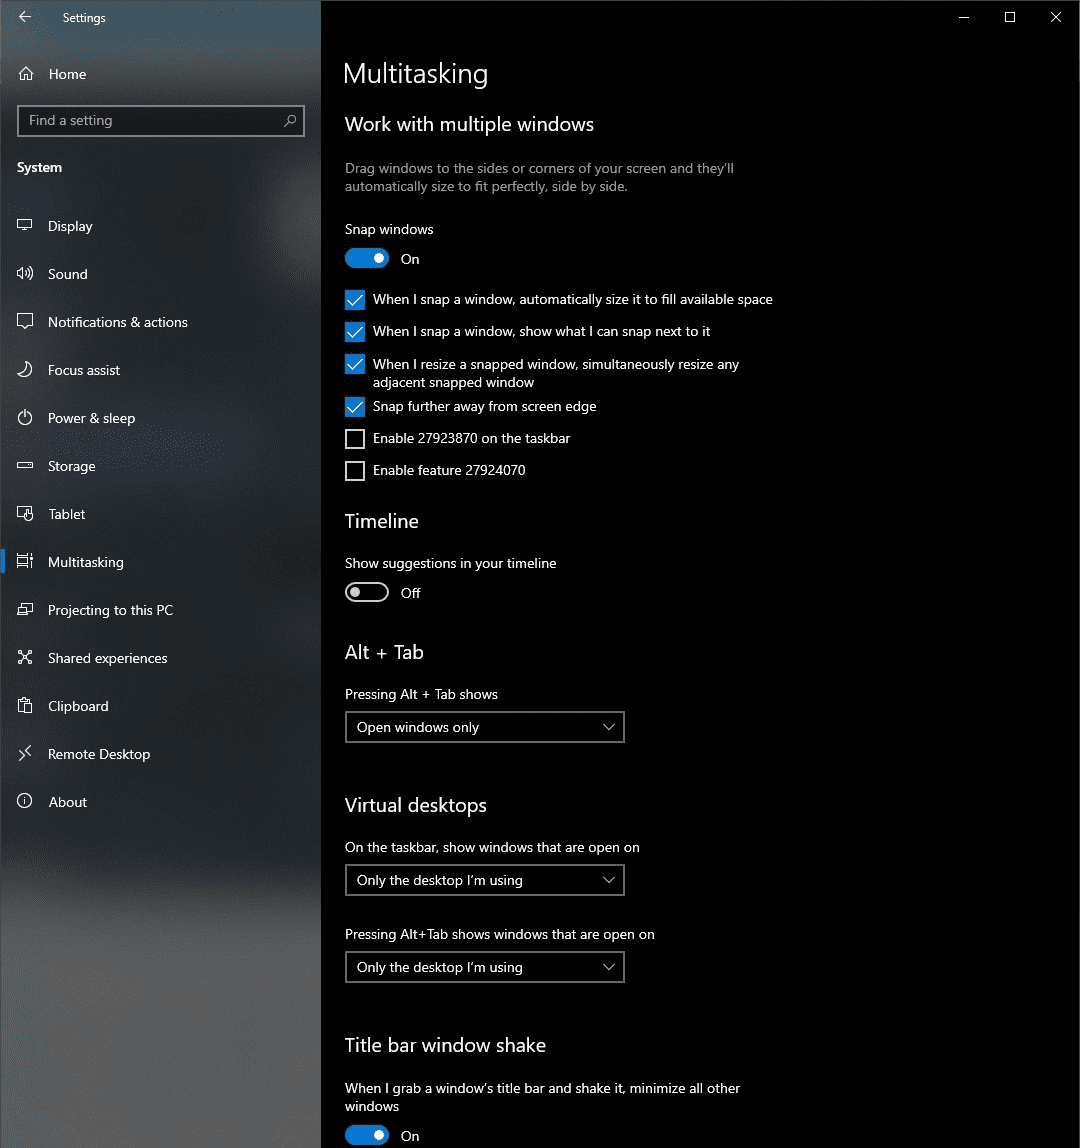 Windows 10 21H2 Multitasking feature having Aero Shake feature